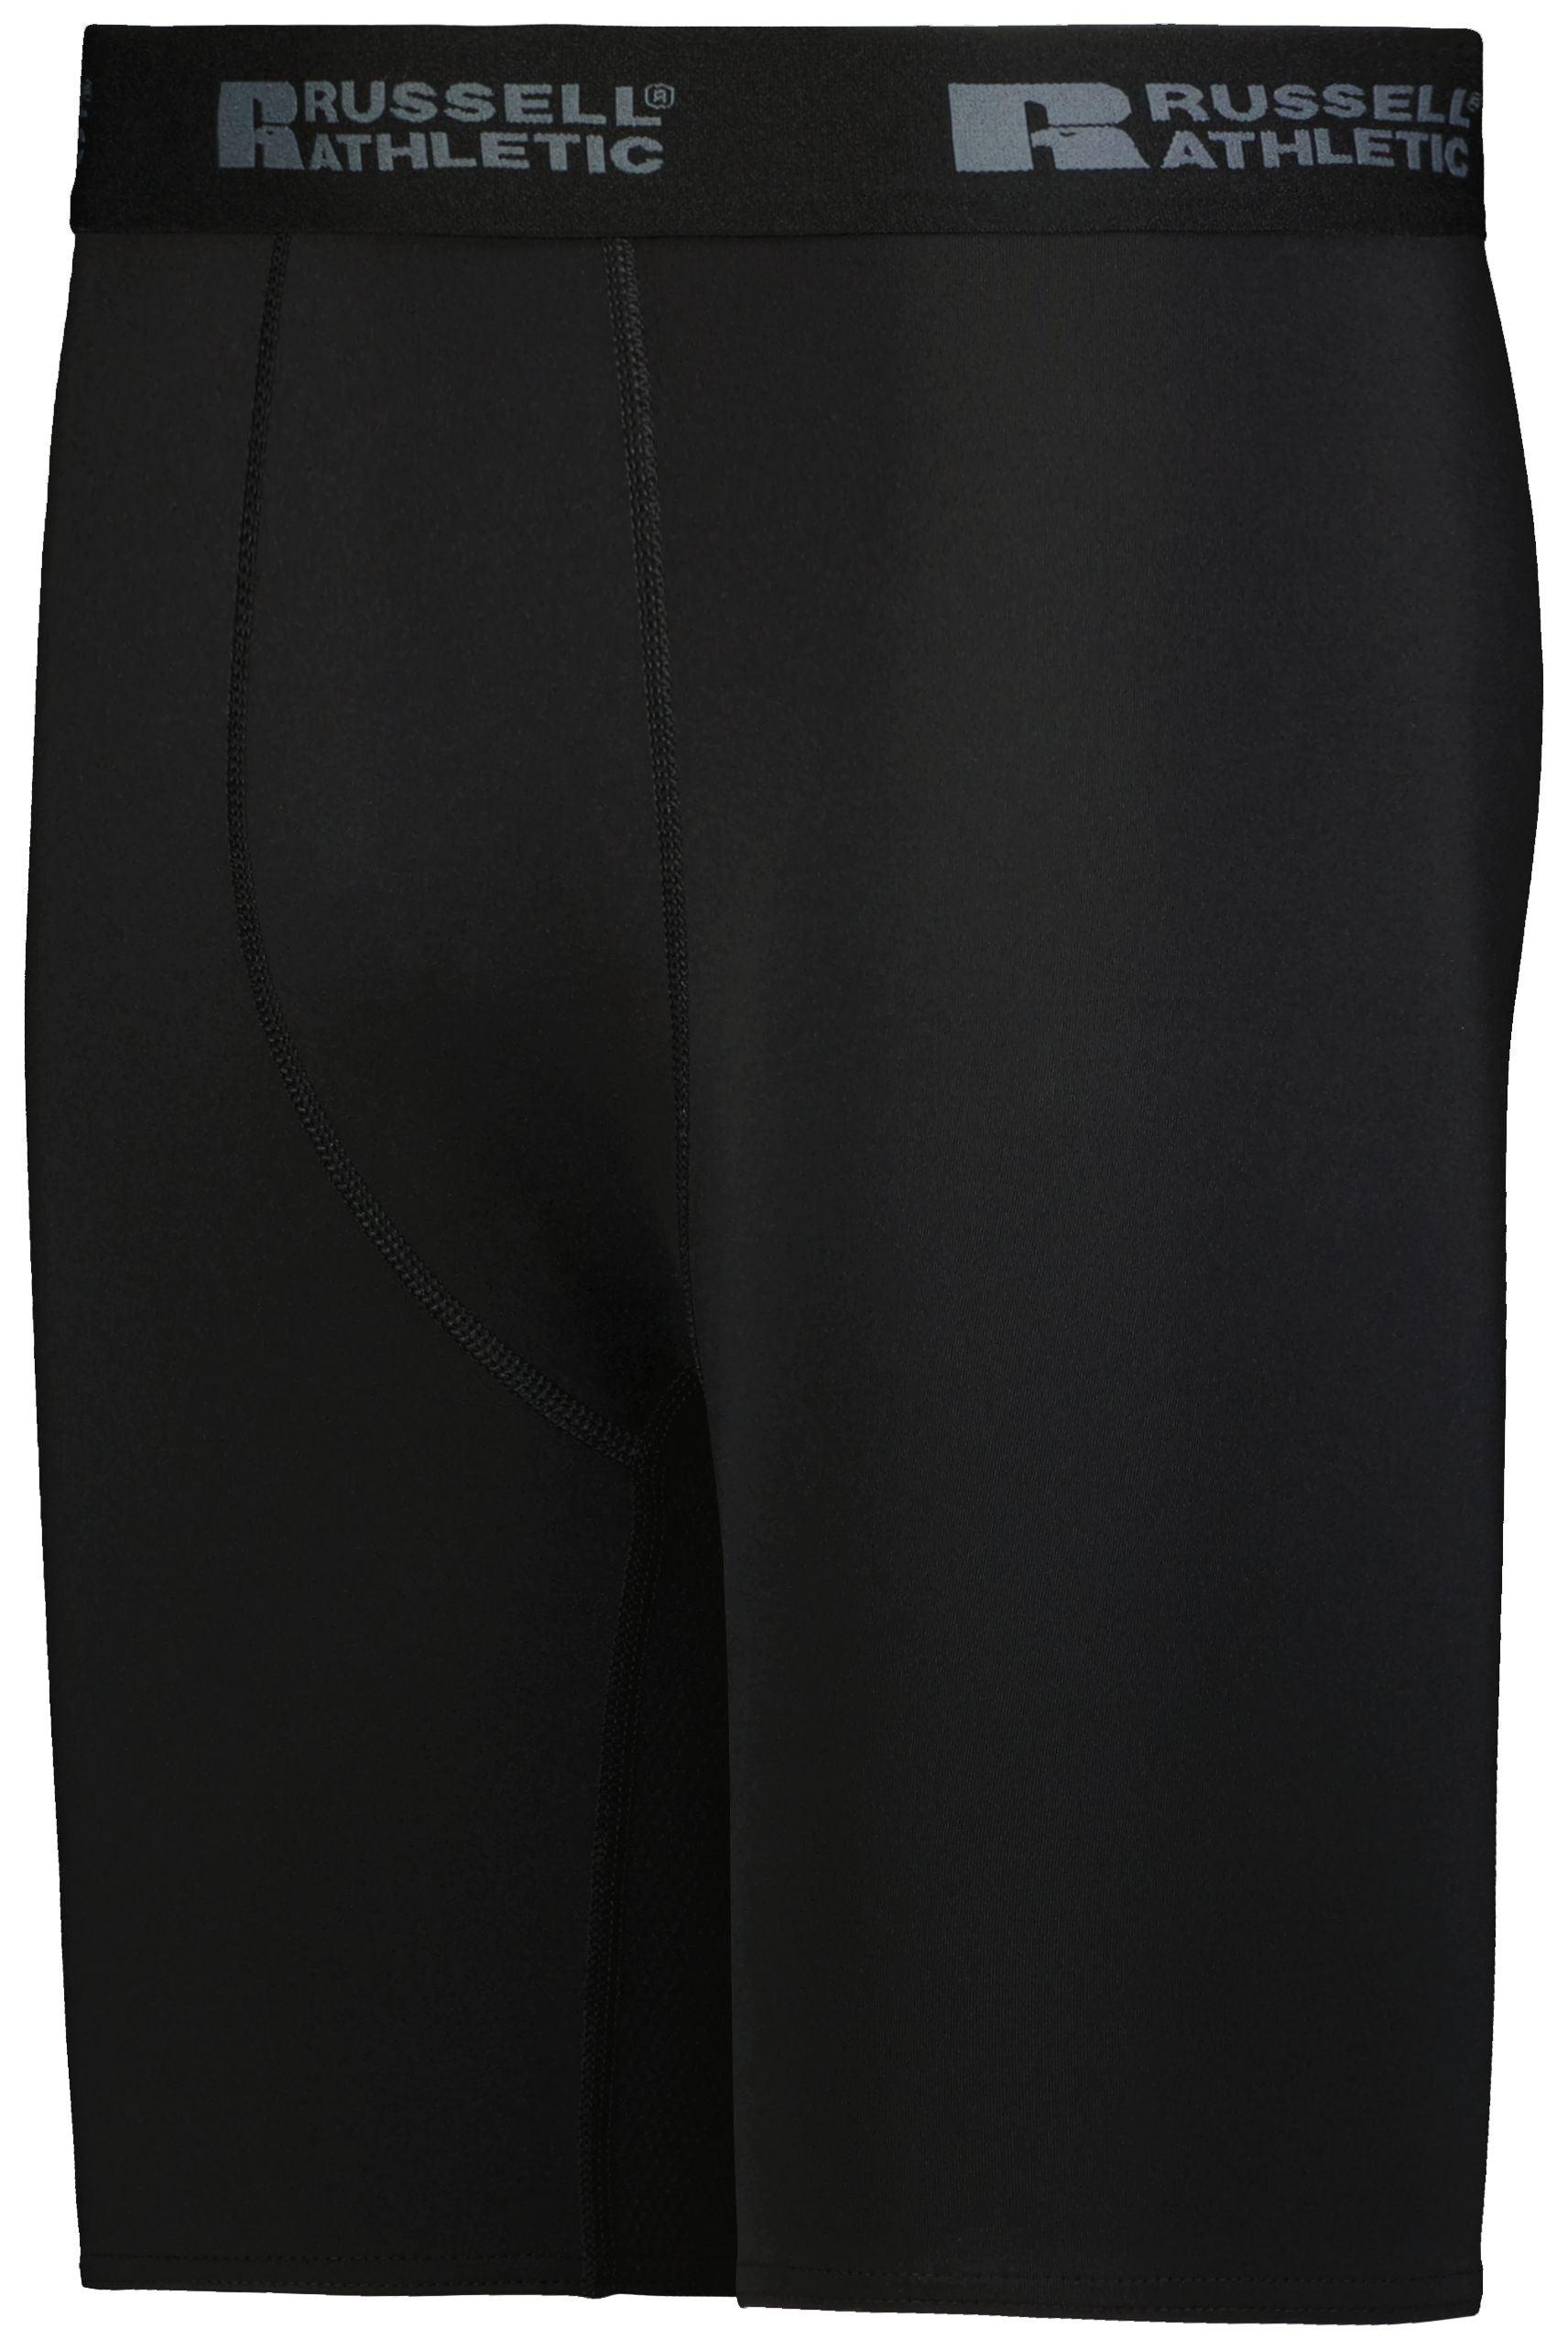 Coolcore® Compression Shorts - Dresses Max